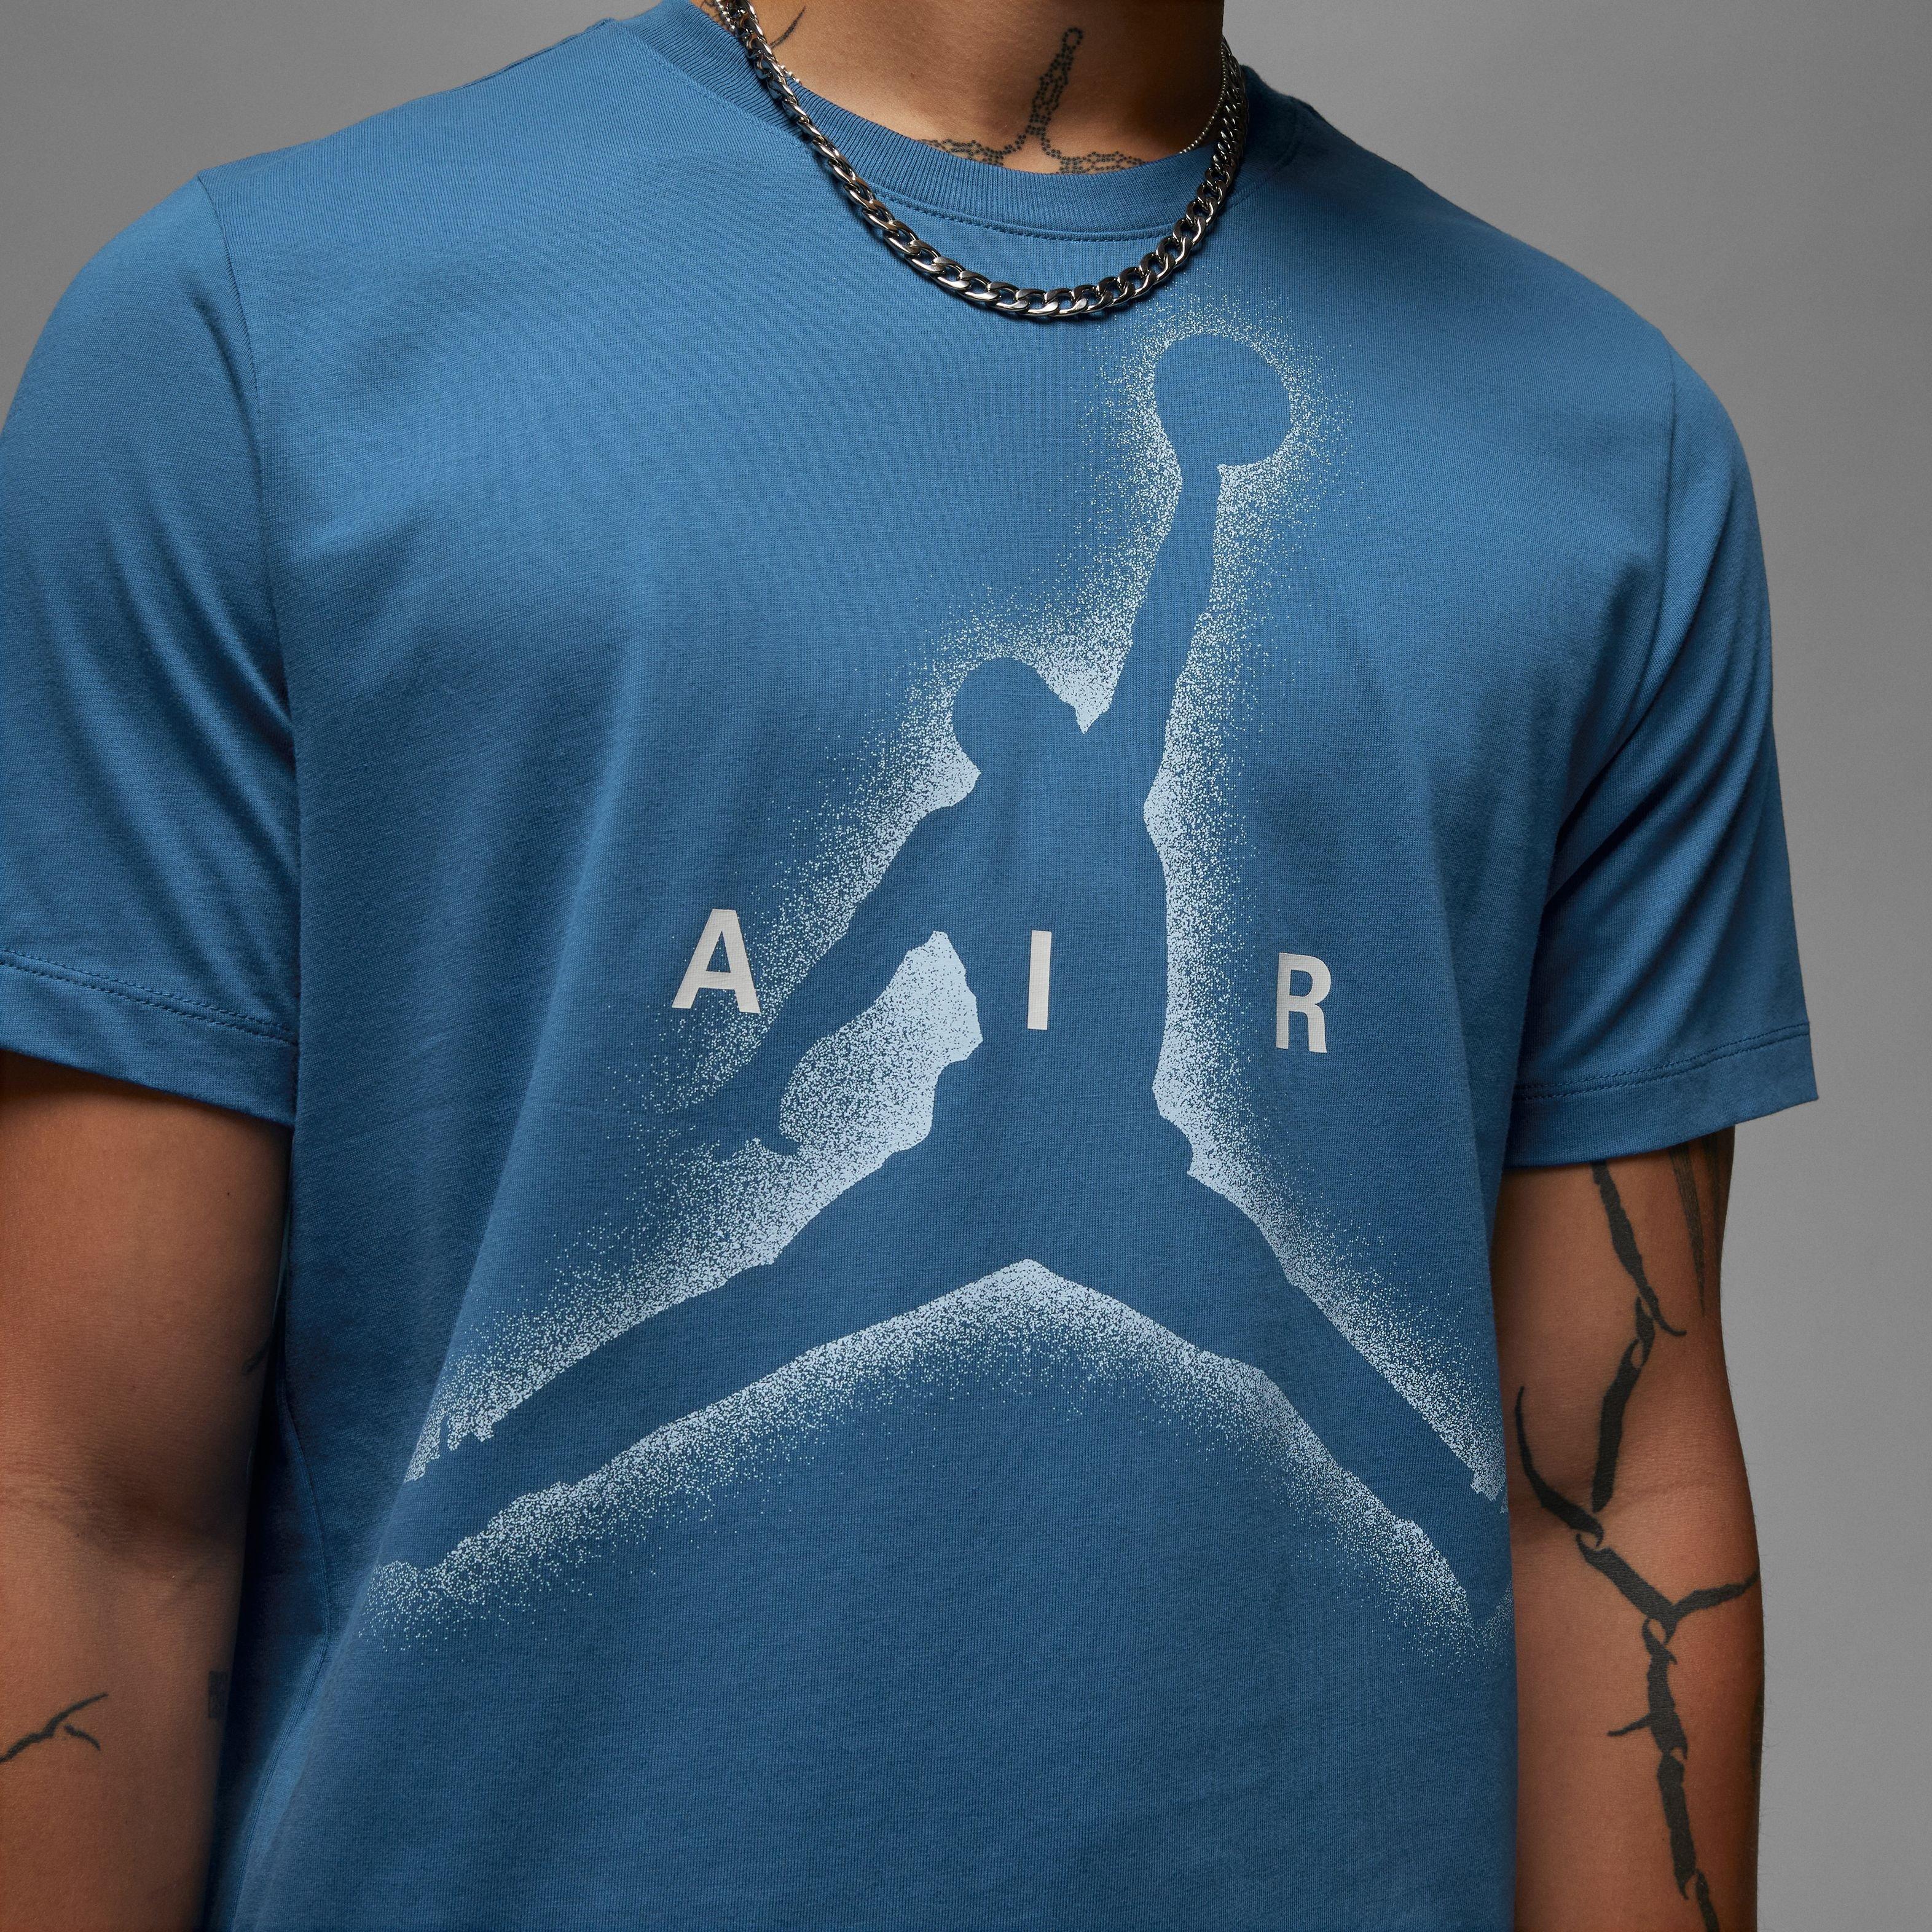 Nike Jordan T-Shirt Jumpman Air HBR Classic Athletic Gym Short Sleeve T- Shirt